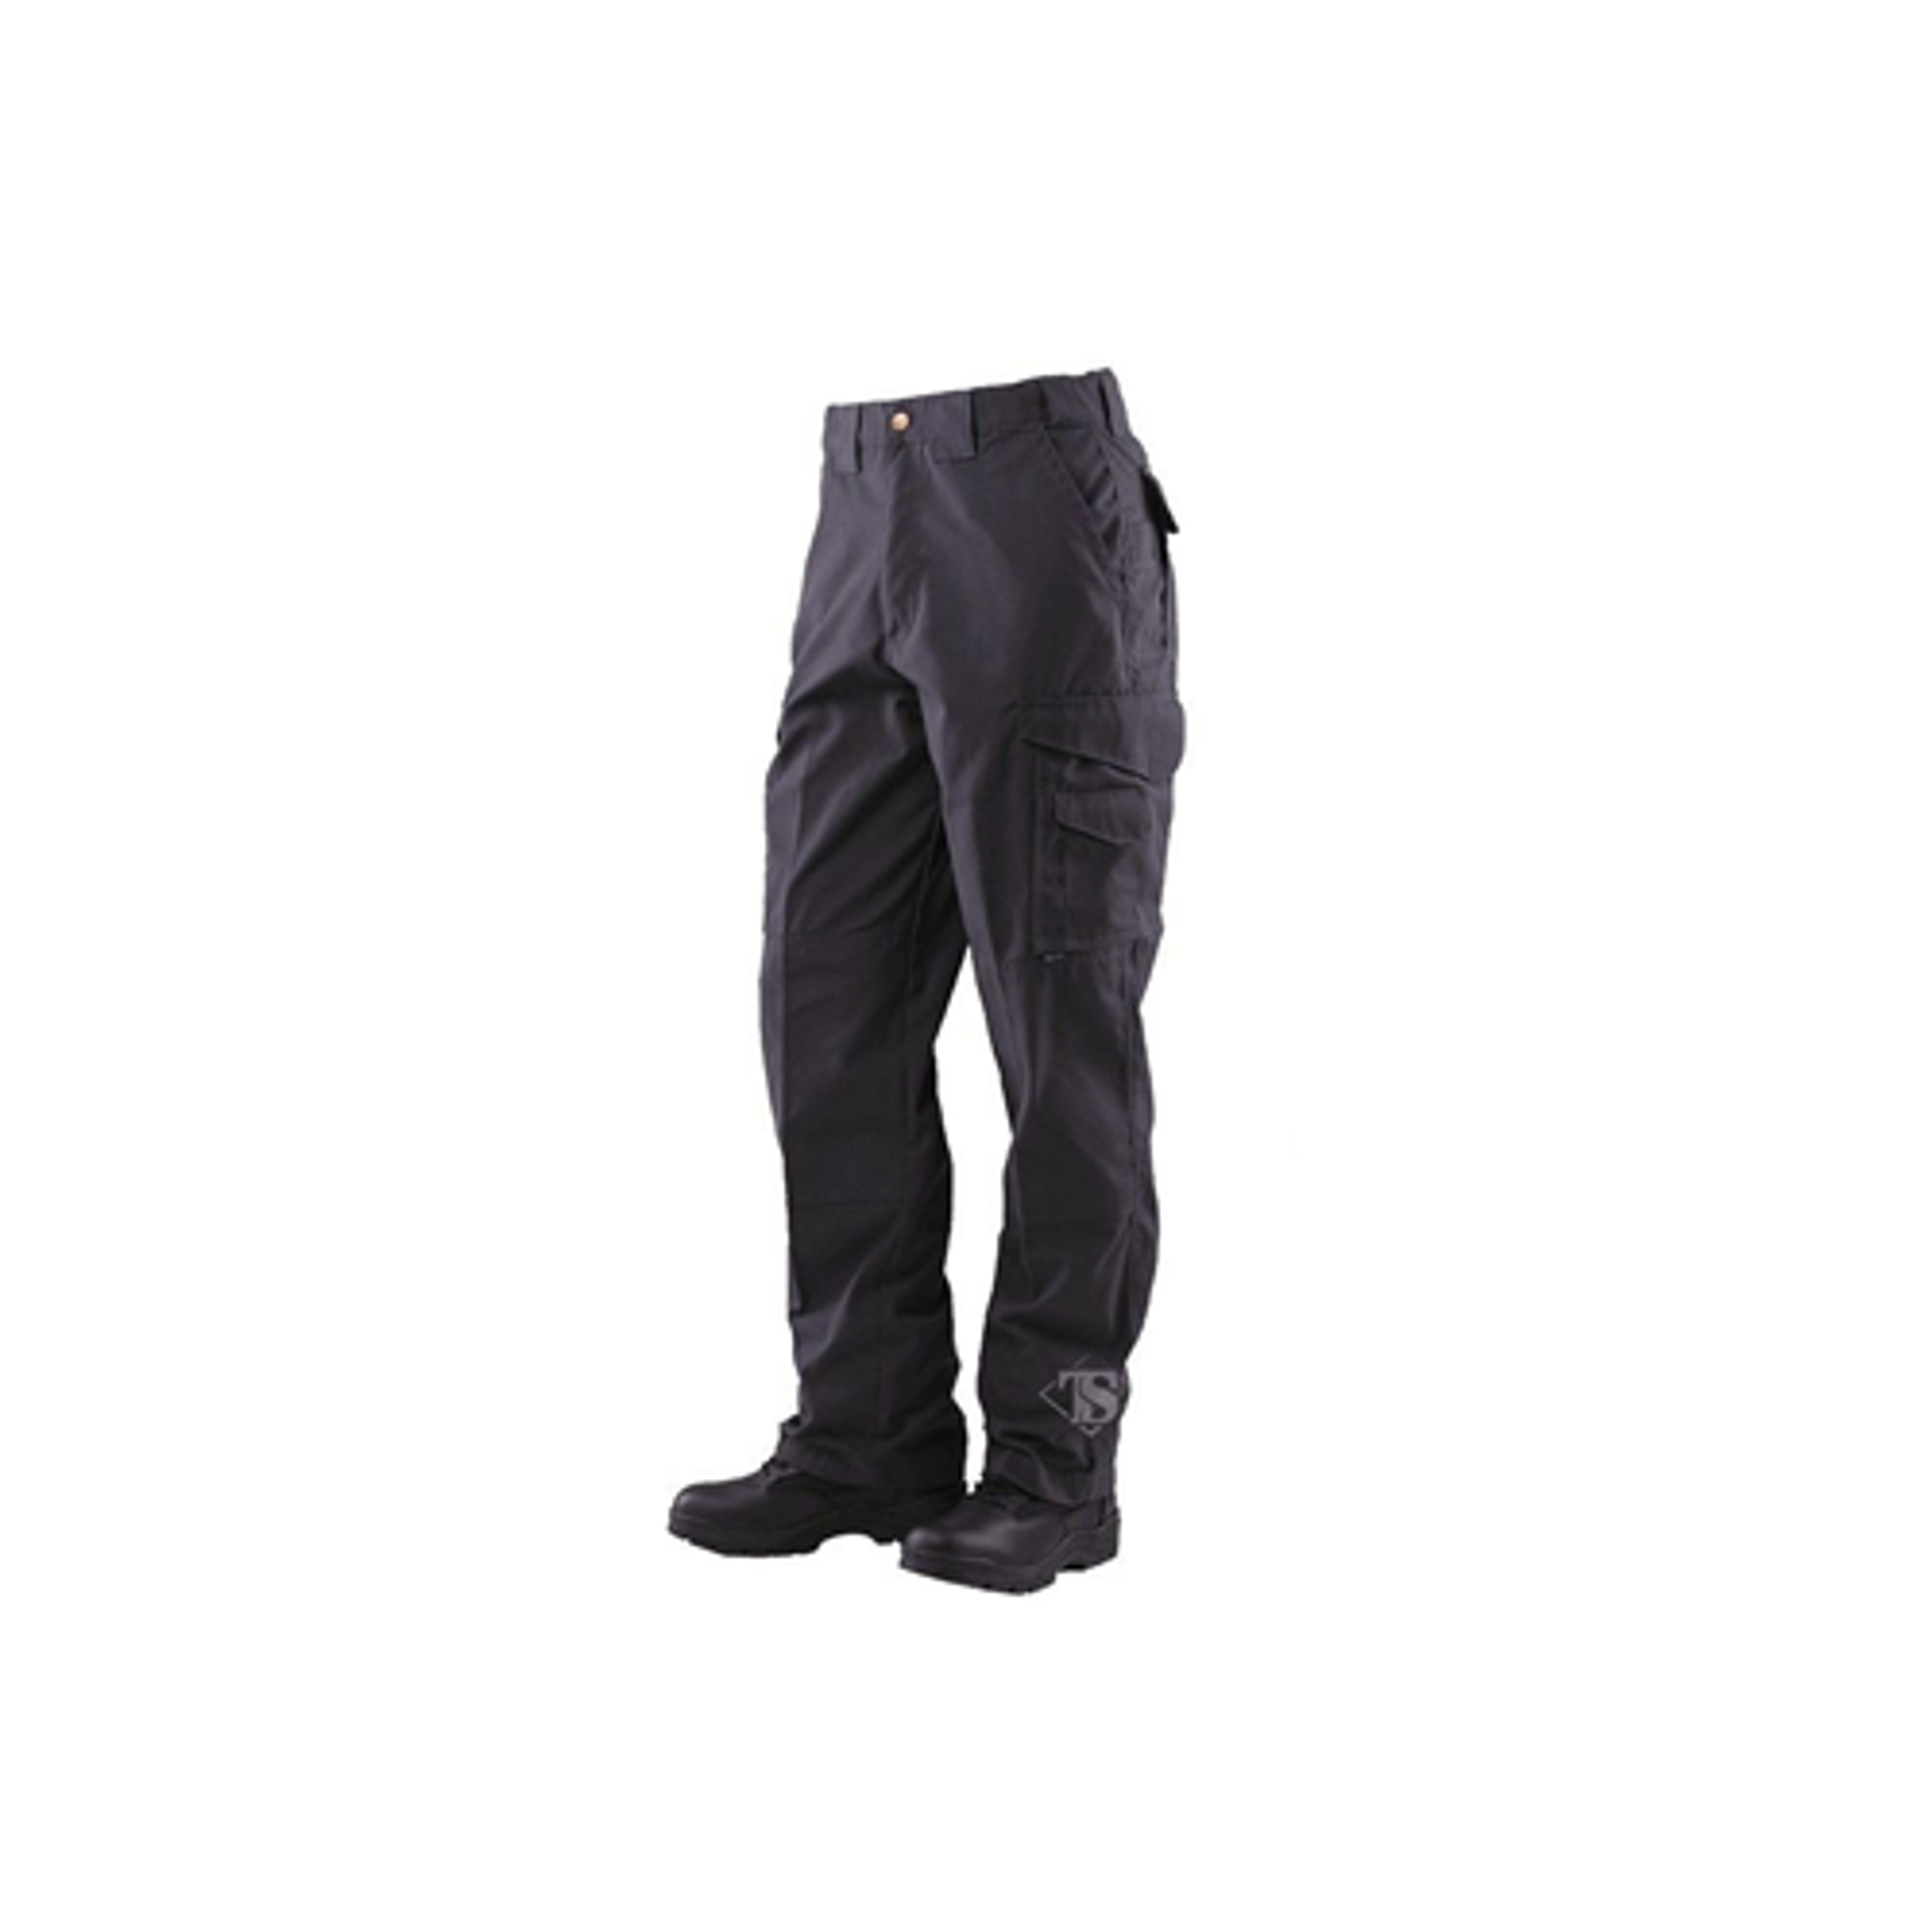 24-7 Original Tactical Pants - 6.5oz - Black - KRTSP-1062094